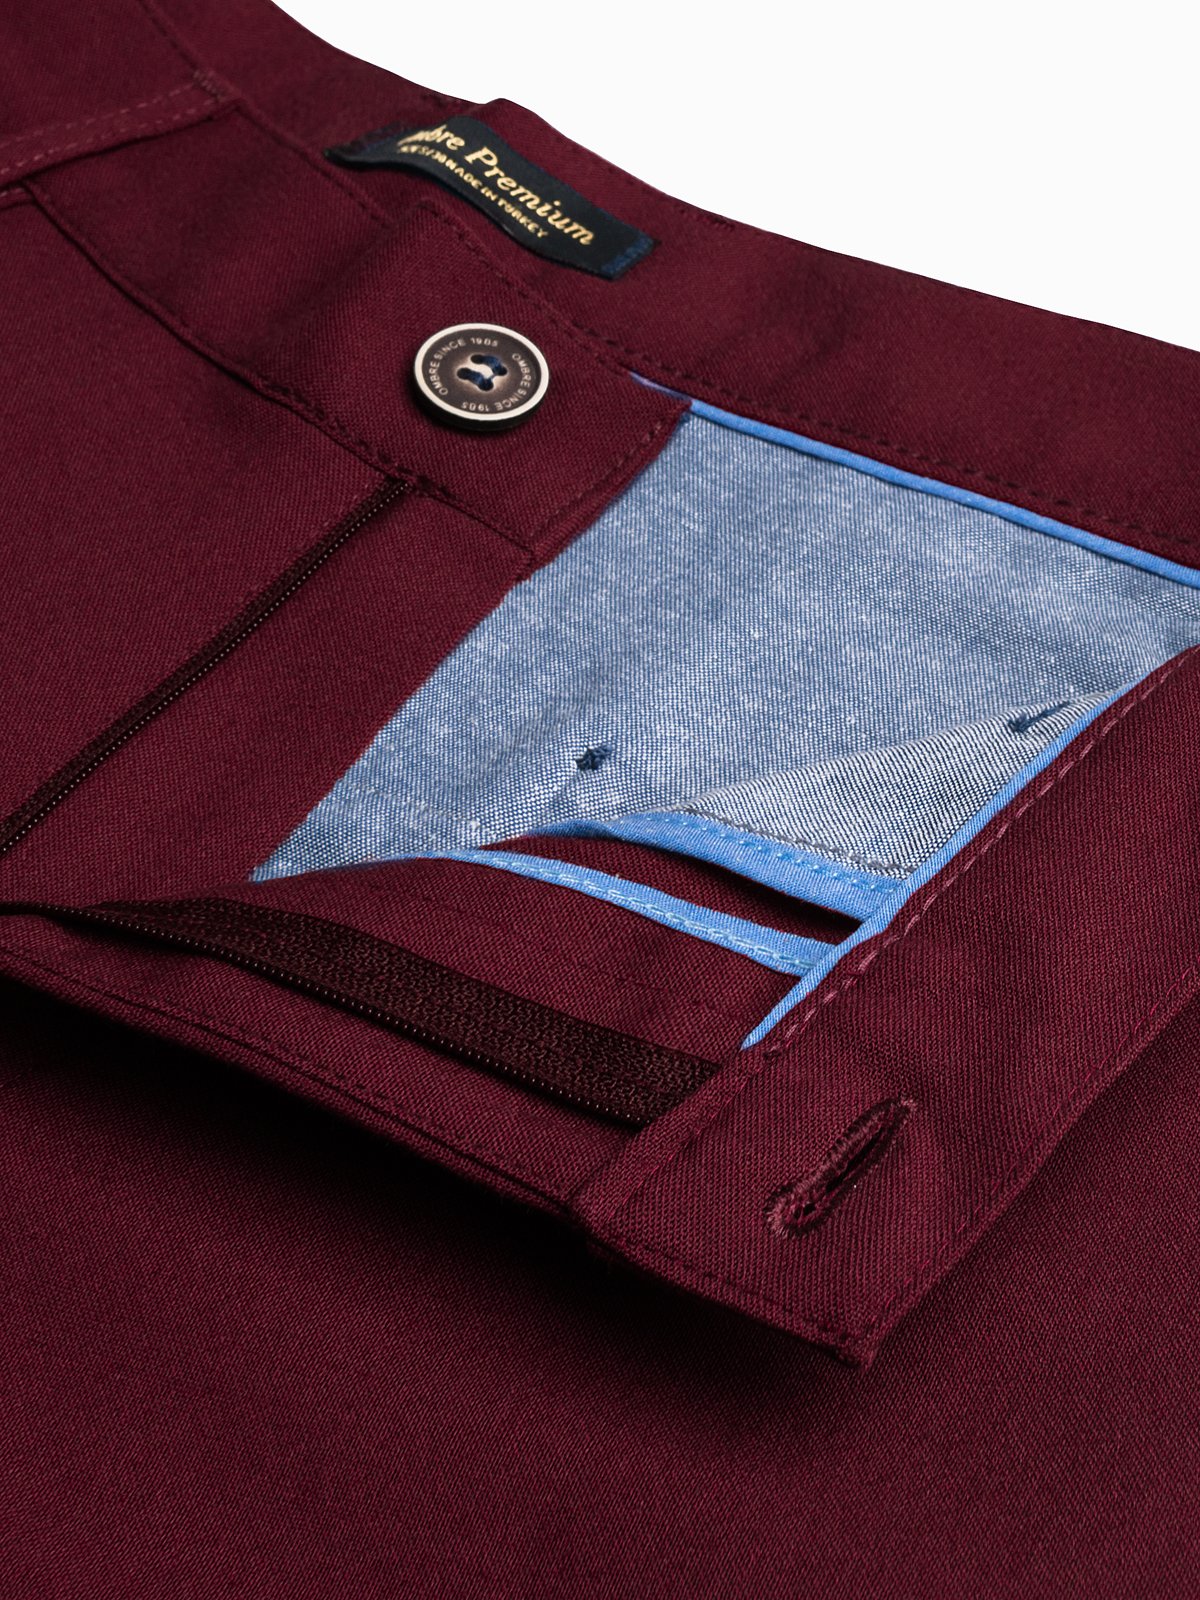 Men's sweatpants P972 - dark red  MODONE wholesale - Clothing For Men